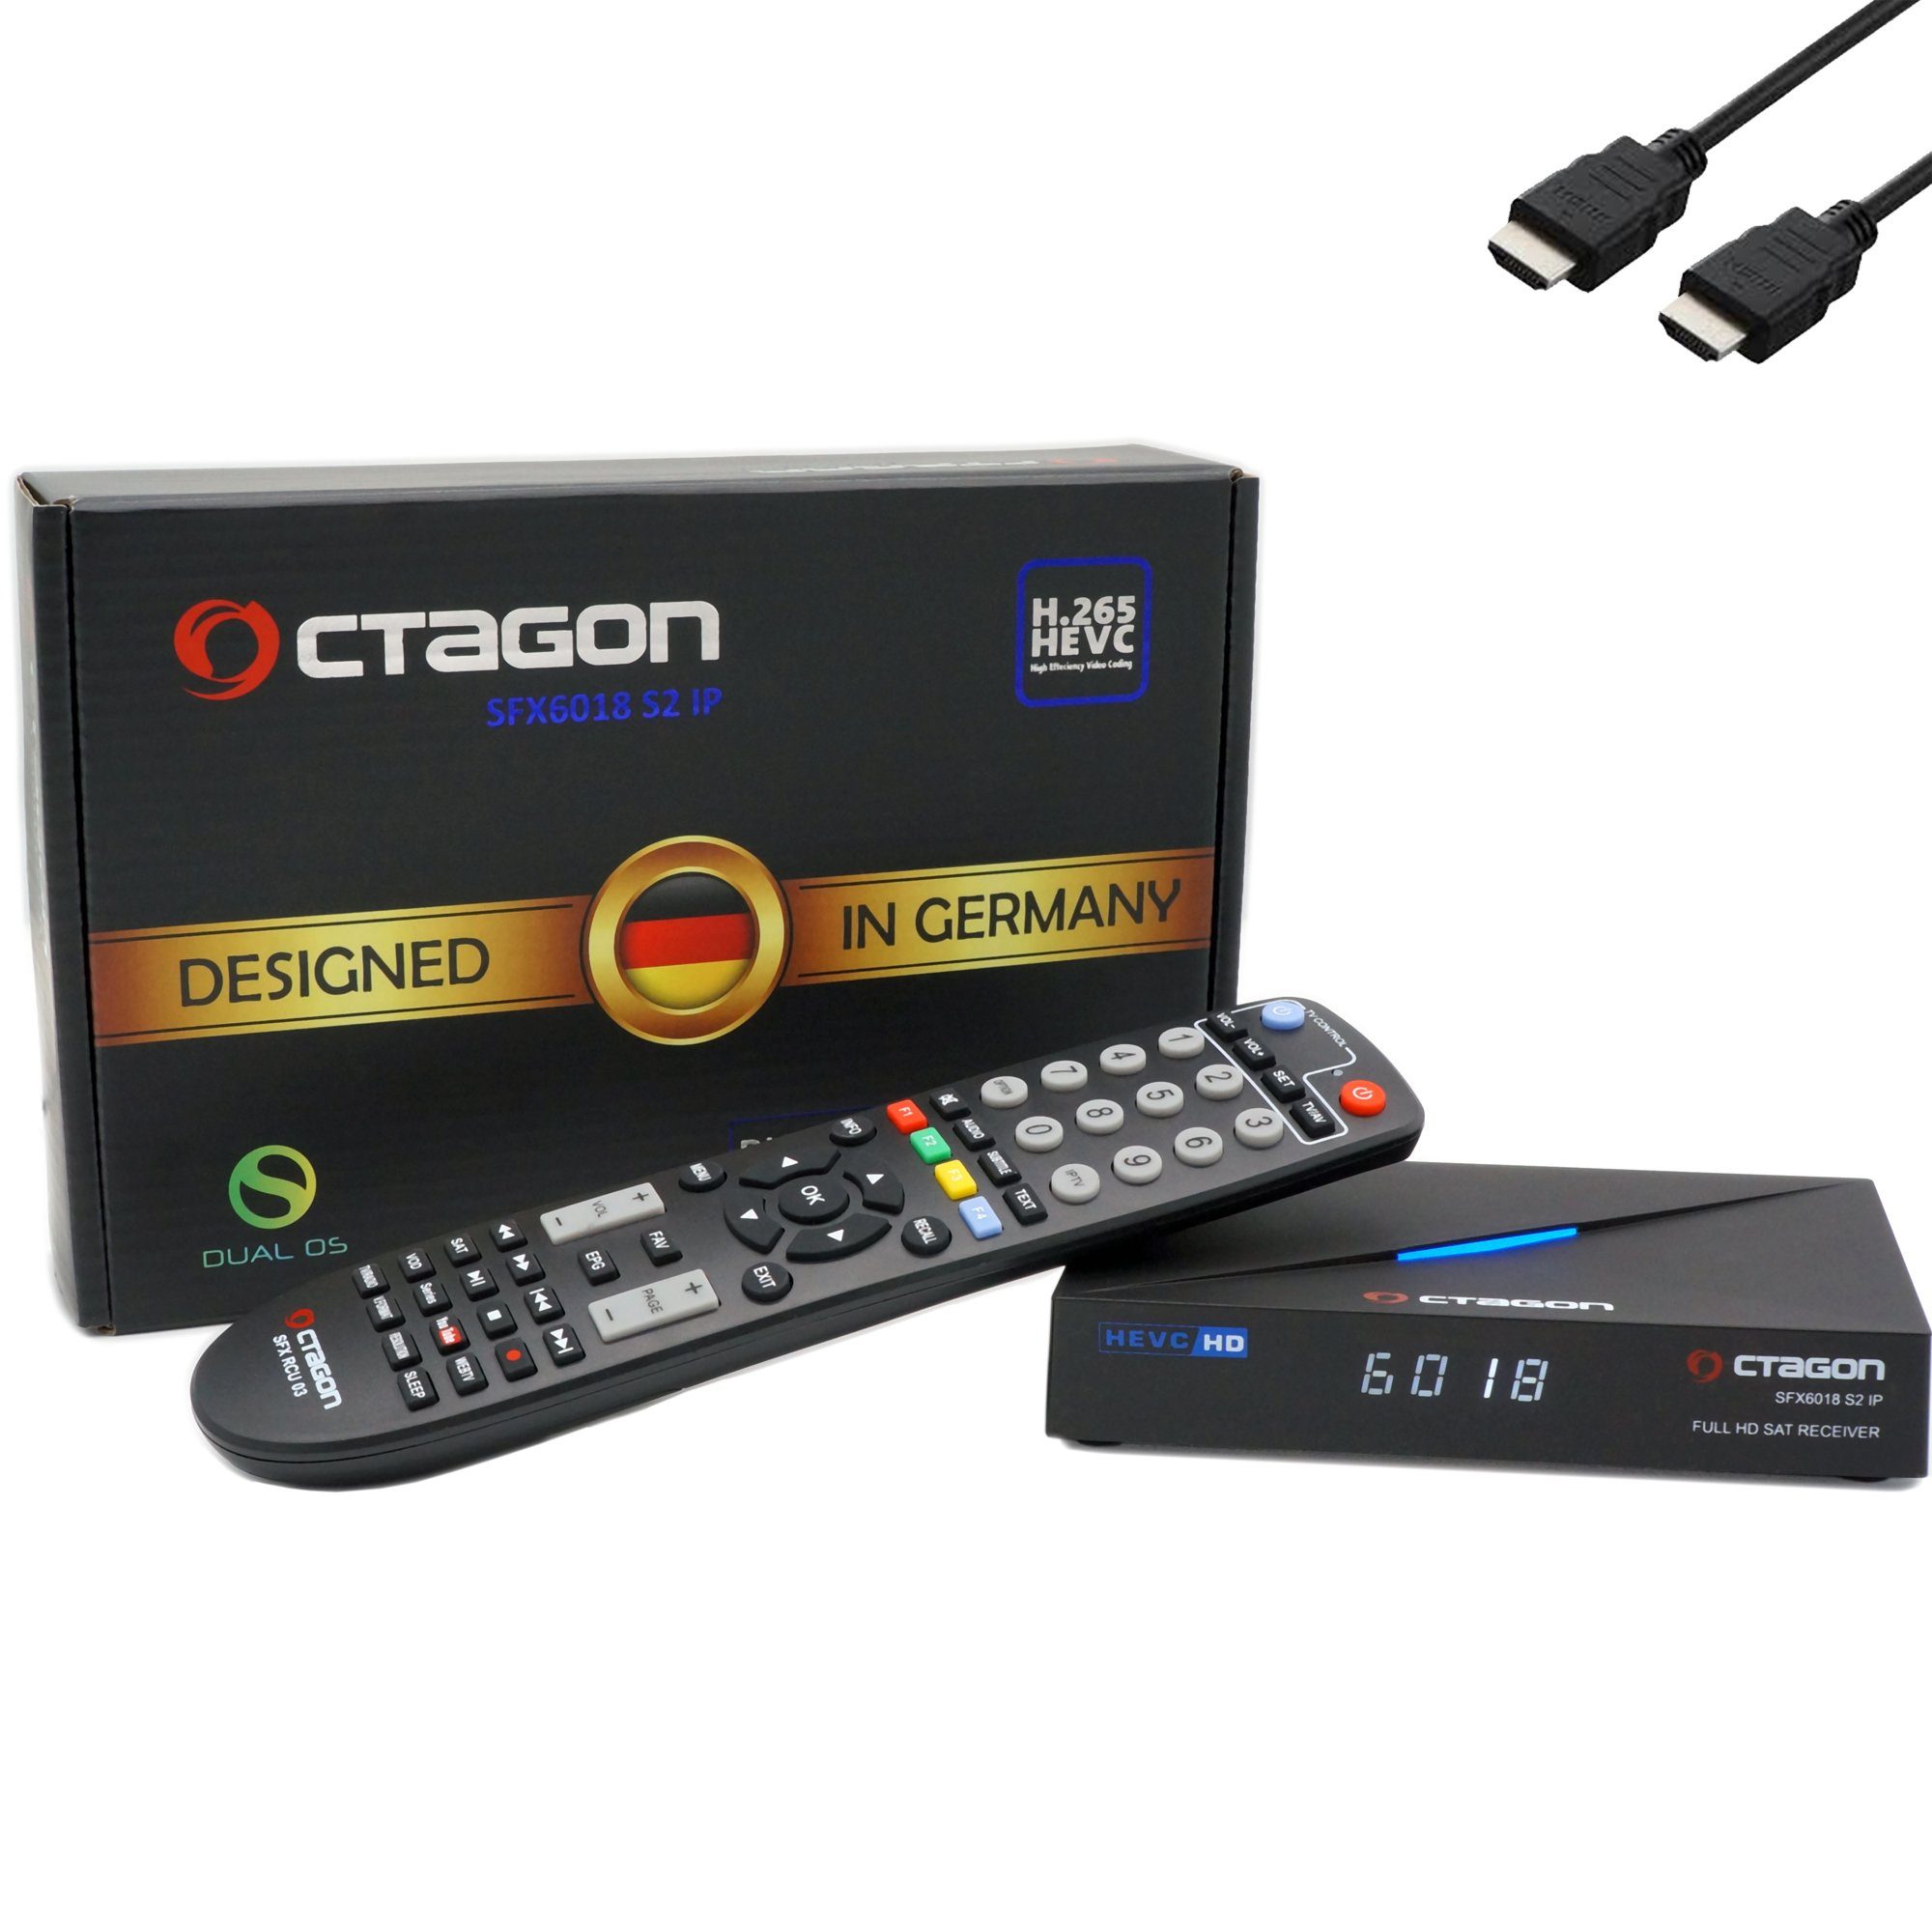 OCTAGON SFX6018 S2+IP - H.265 Smart HD DVB-S2 E2 Linux 1x Receiver, HEVC Sat SAT-Receiver